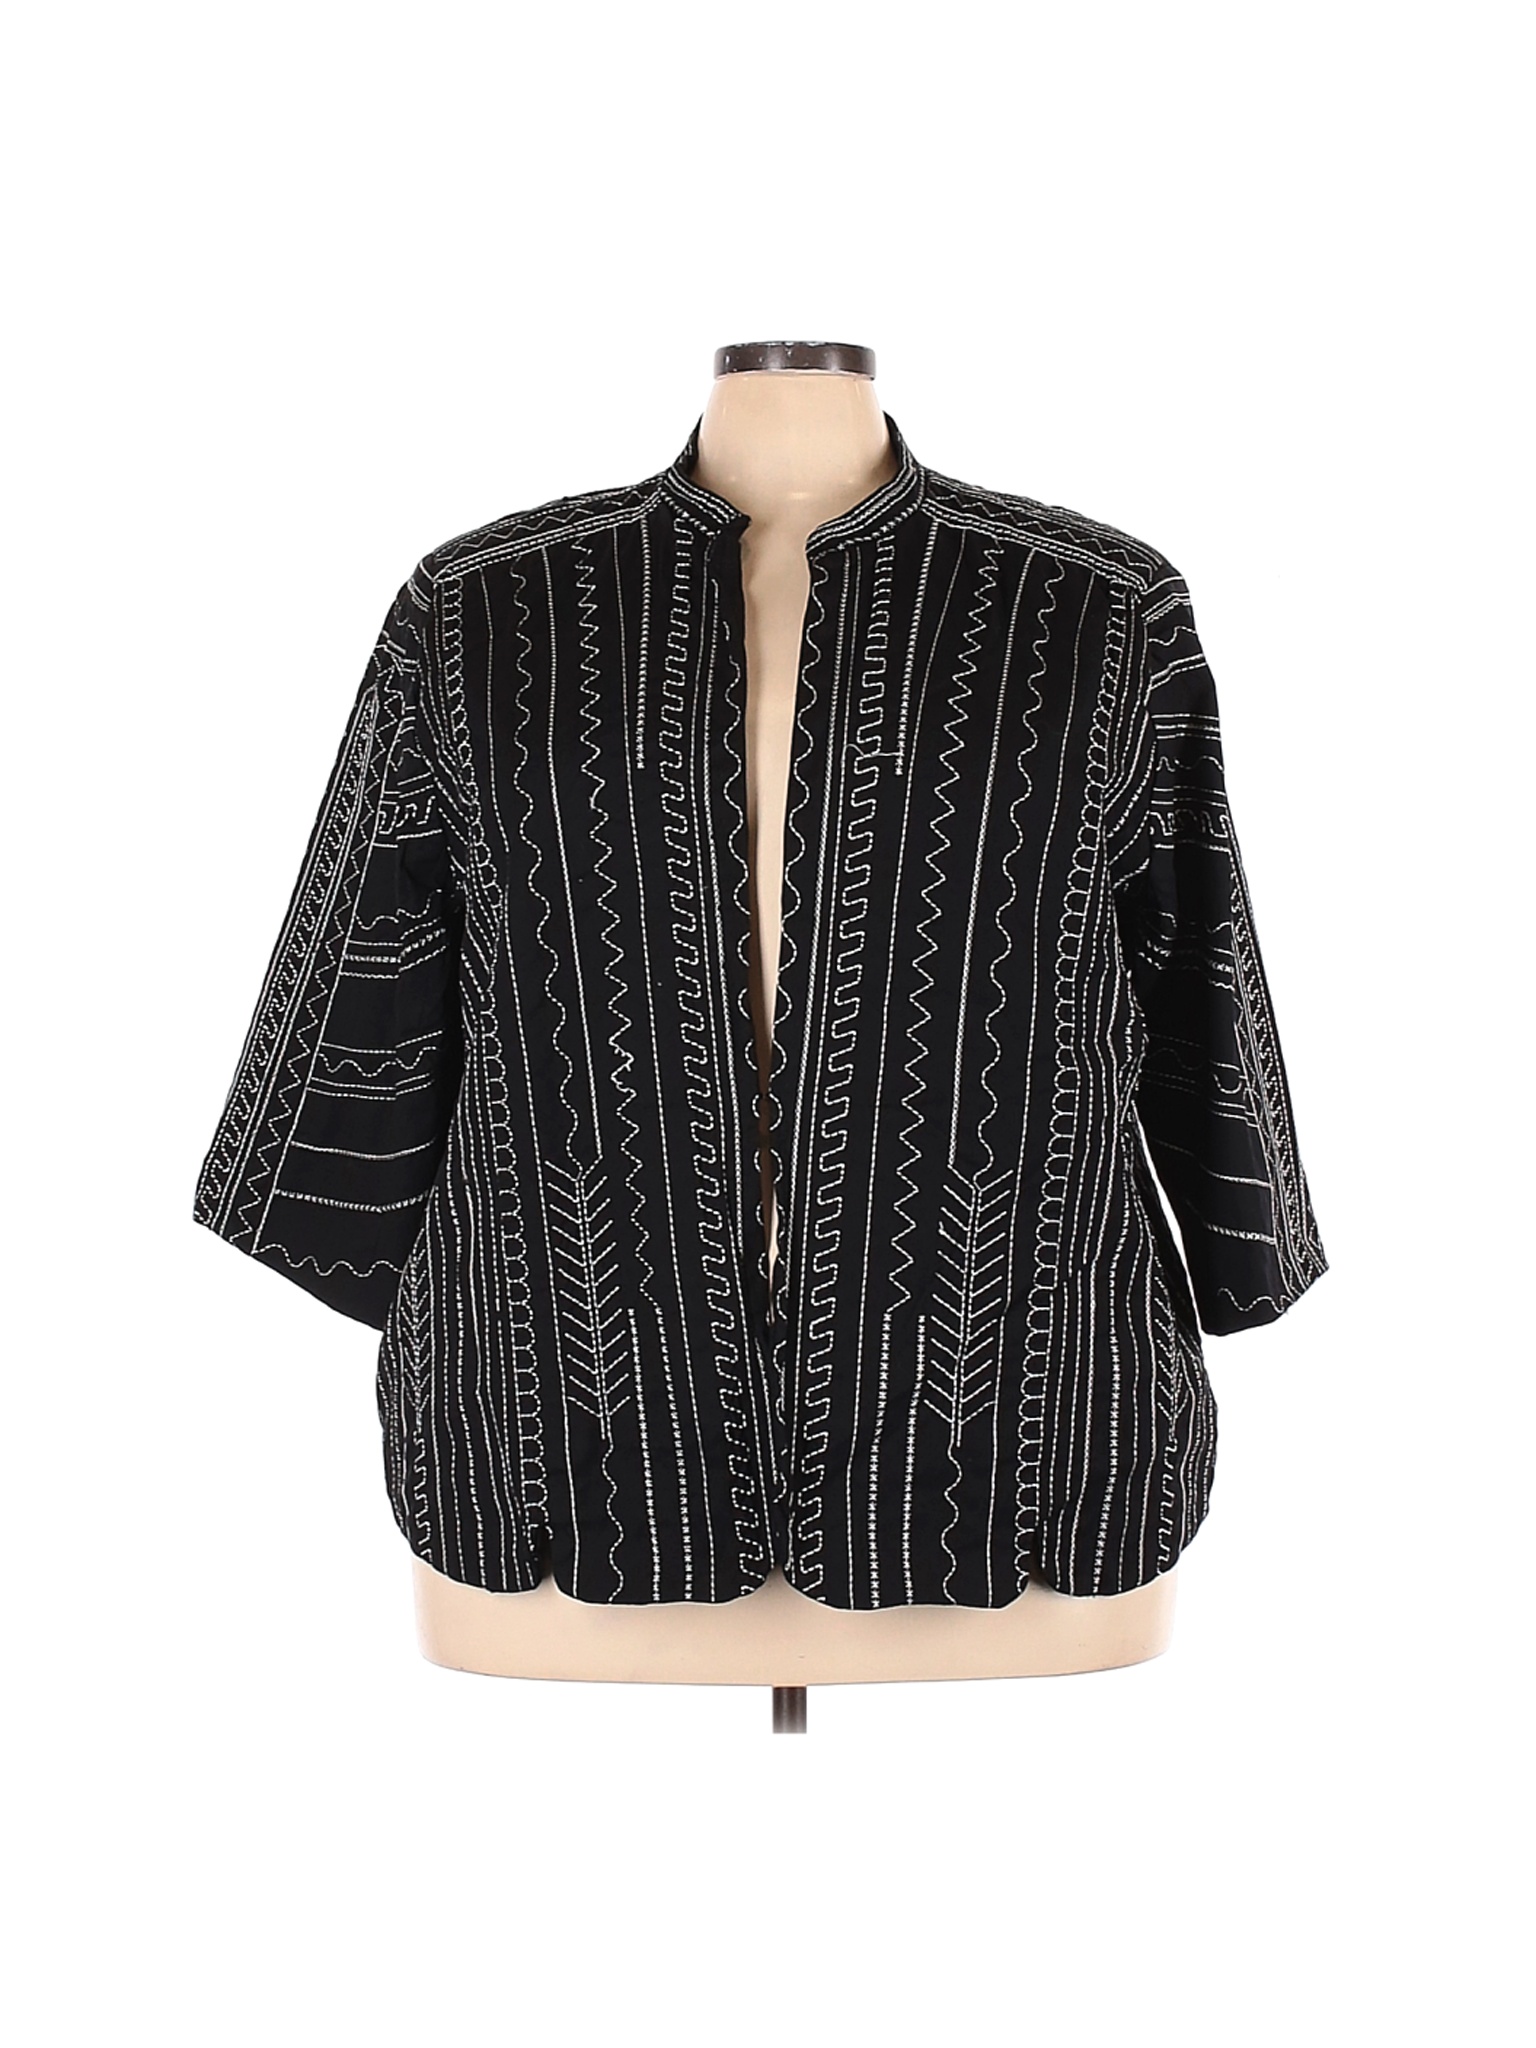 Maggie Barnes Women Black Jacket 3X Plus | eBay